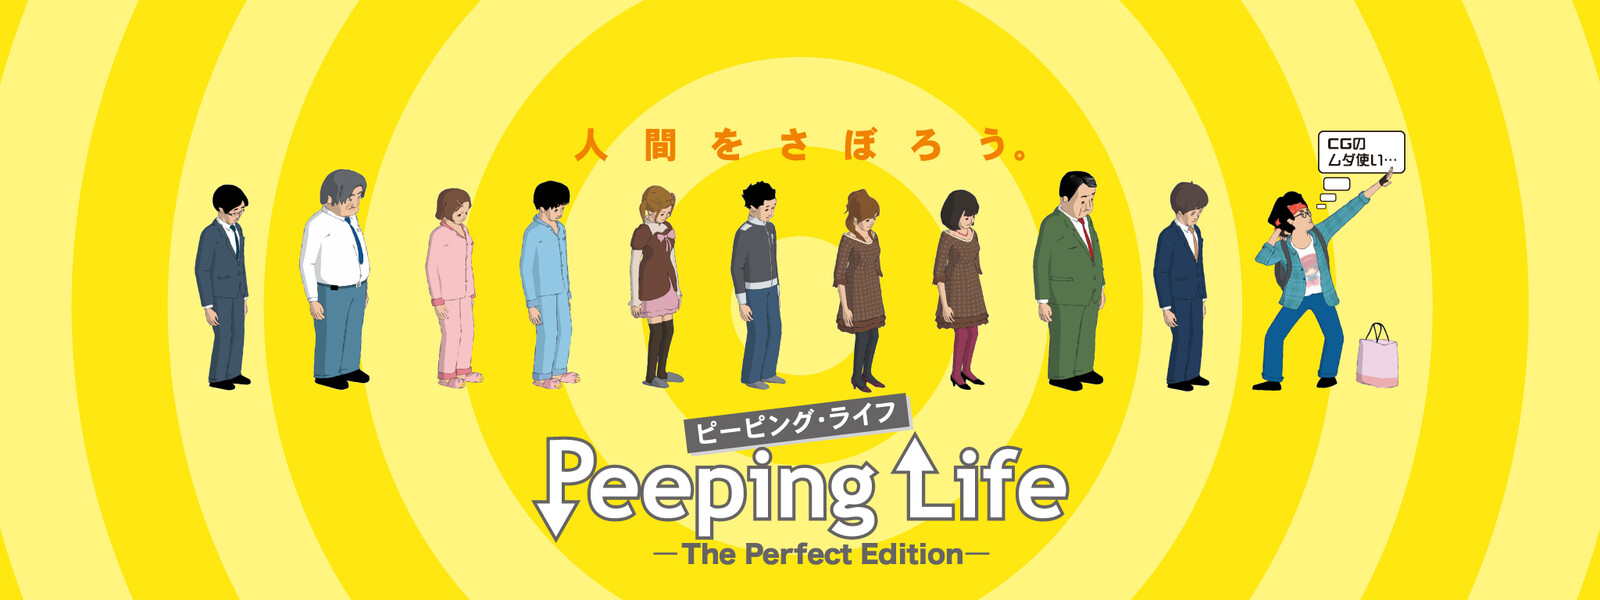 Peeping Life (ピーピング･ライフ) -The Perfect Edition- イエロー盤の動画 - Peeping Life (ピーピング・ライフ) -手塚プロ・タツノコプロ アニメバンチョー版